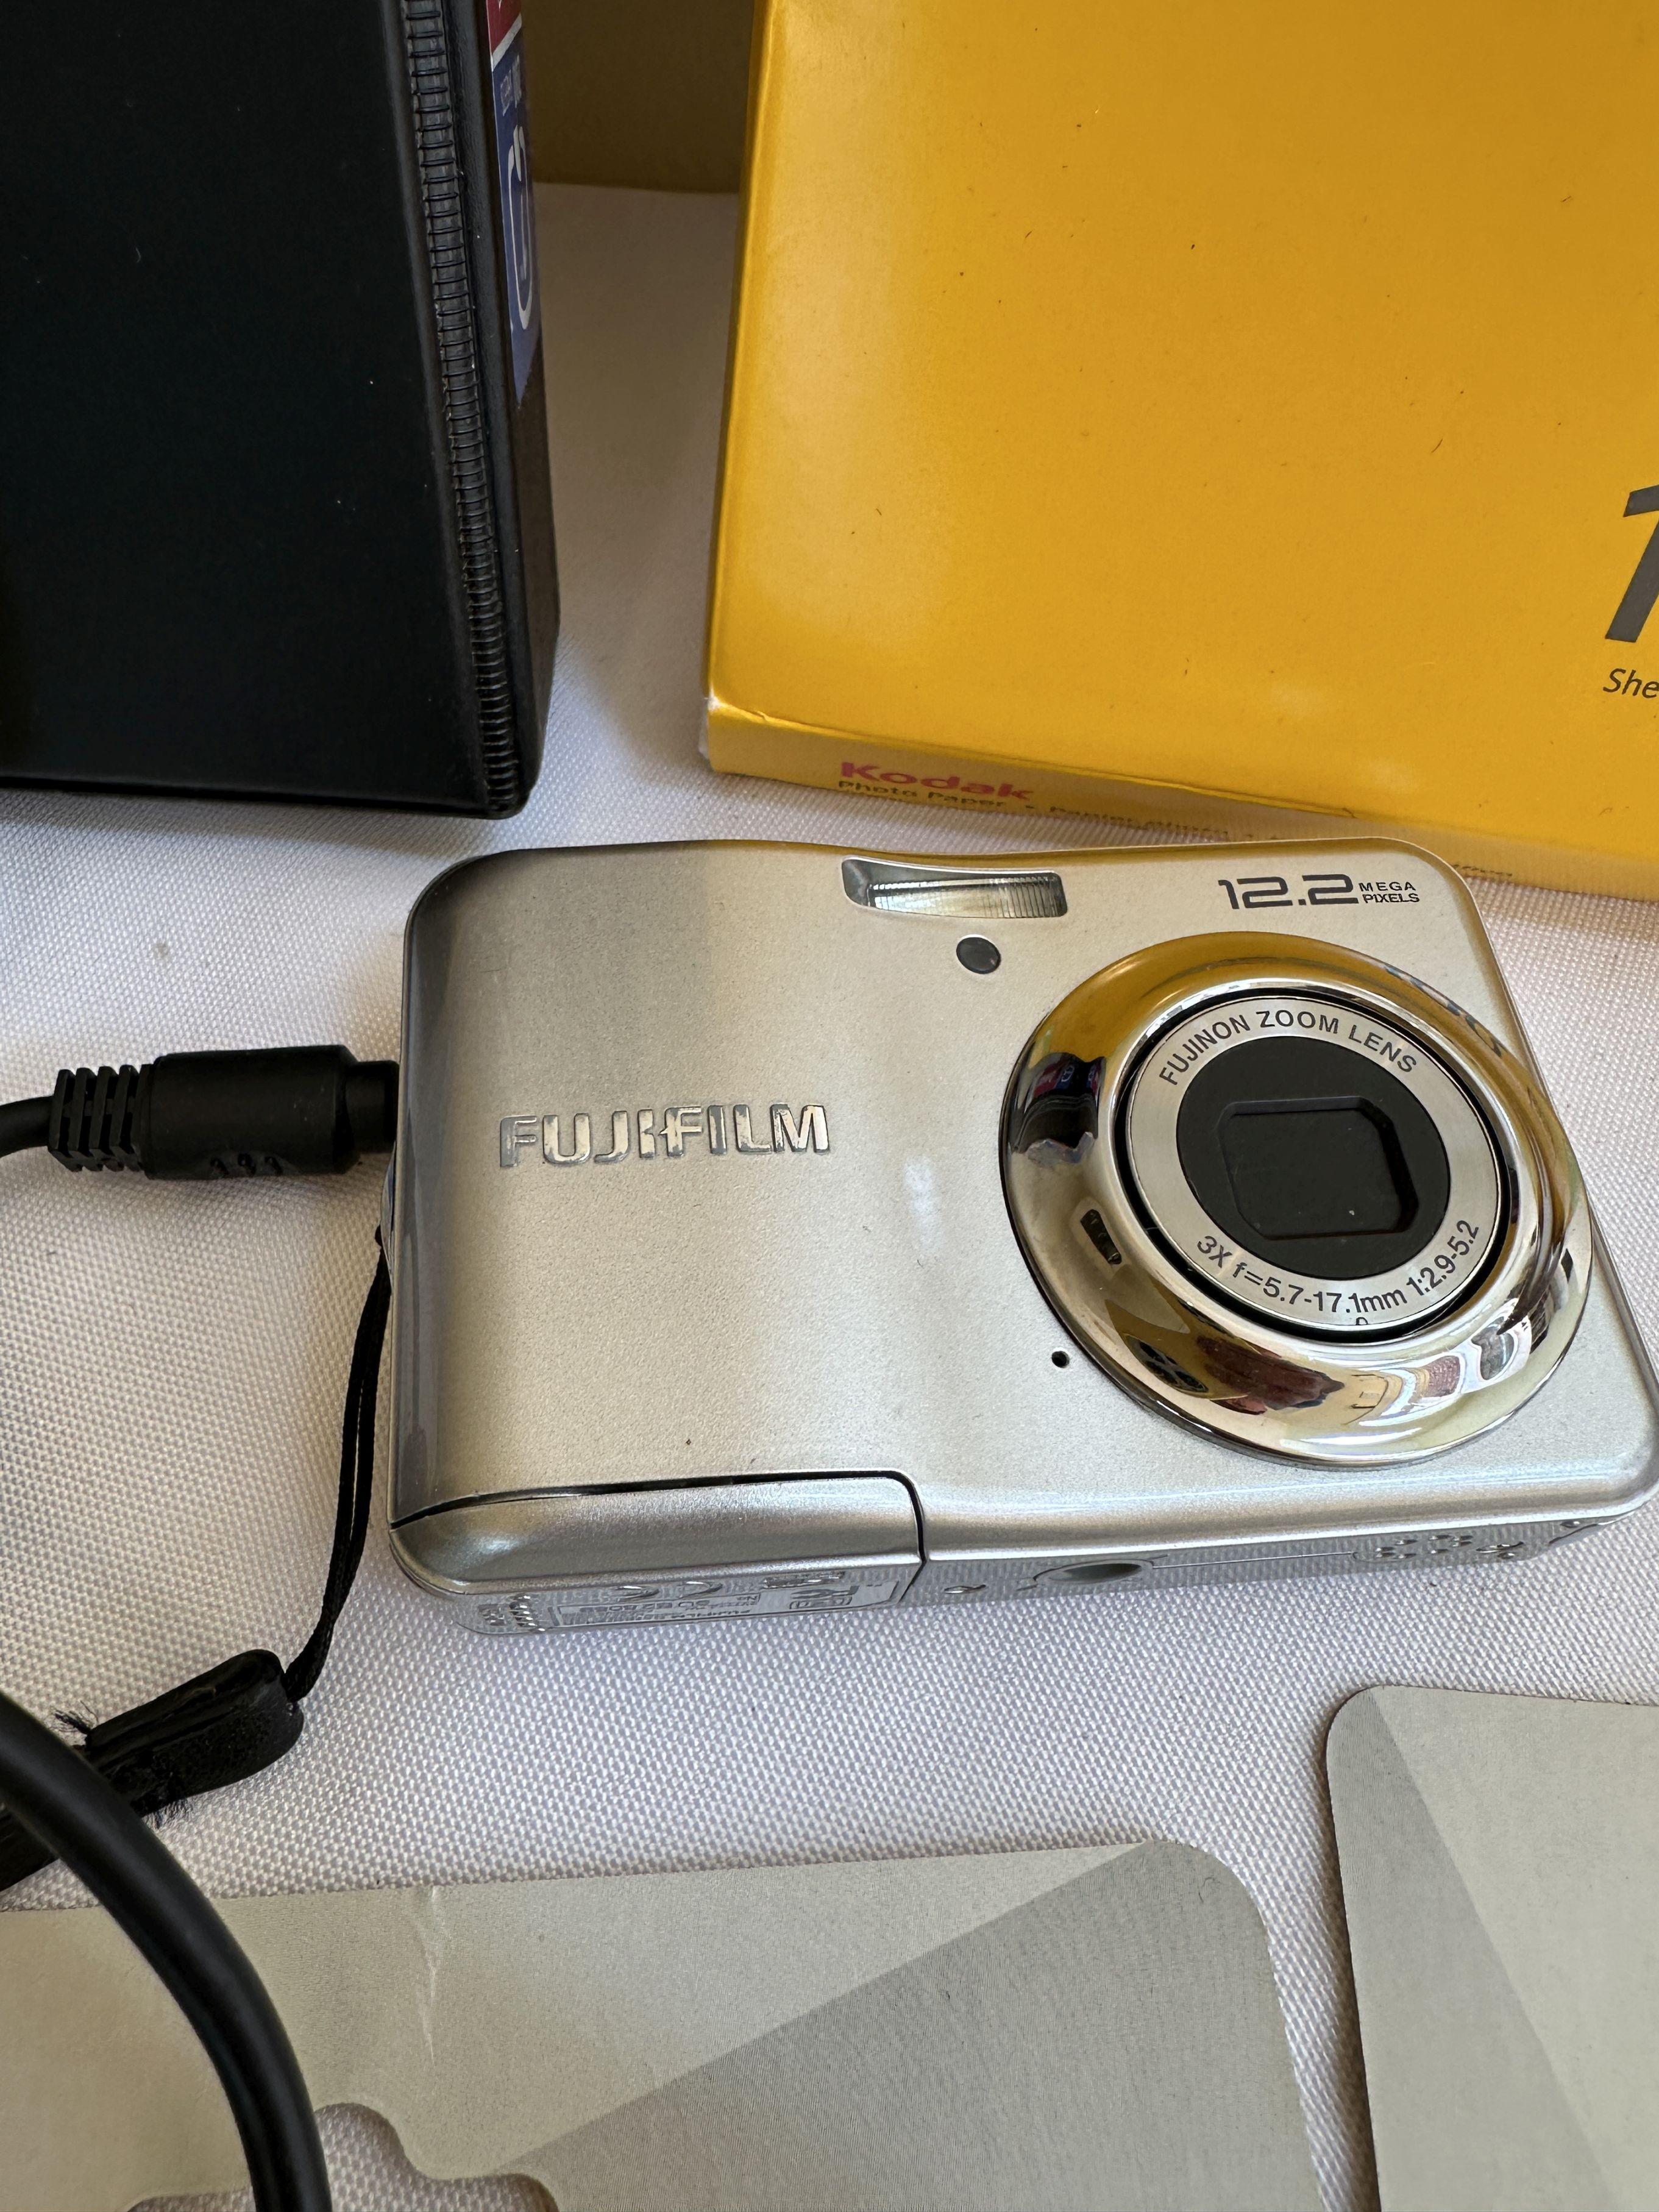 Box Lot/Fuji Film Digital Camera, Memory Cards, Misc Office Supplies